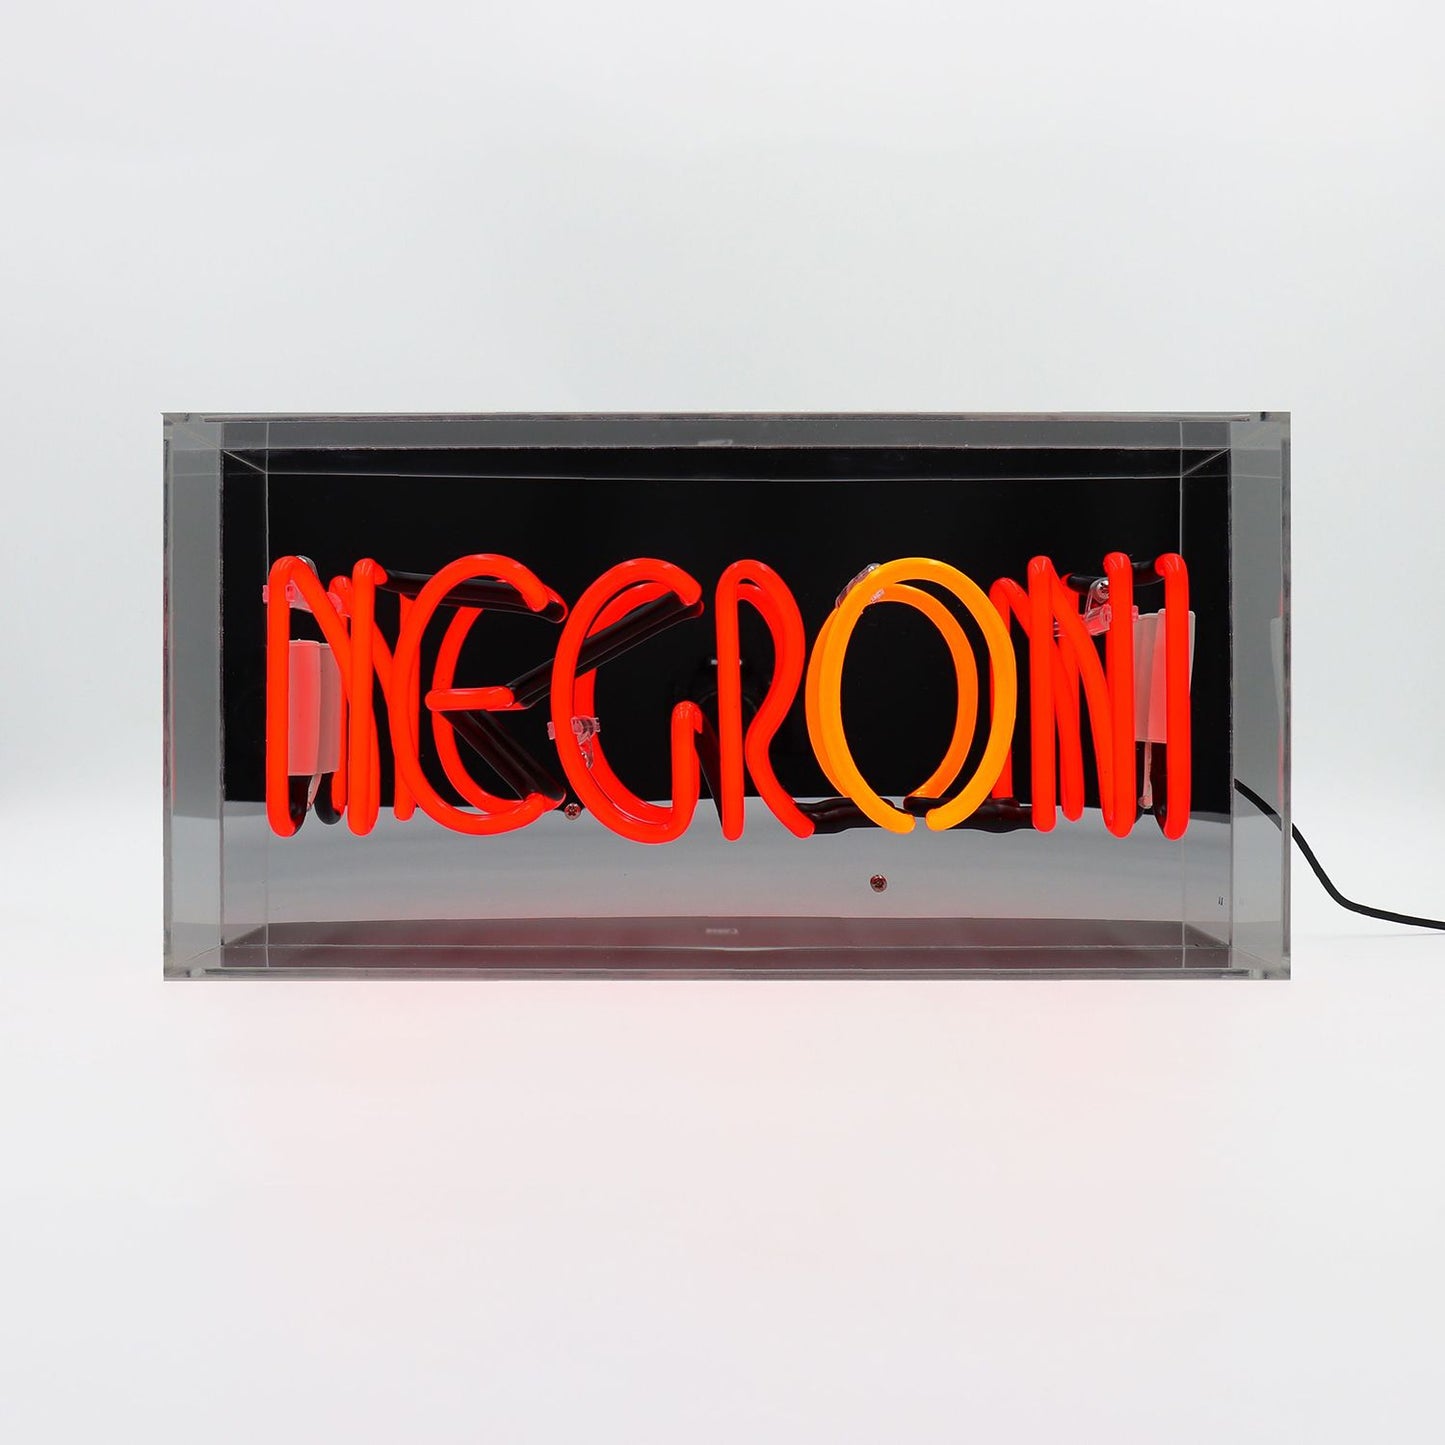 Negroni Neon Light - Red